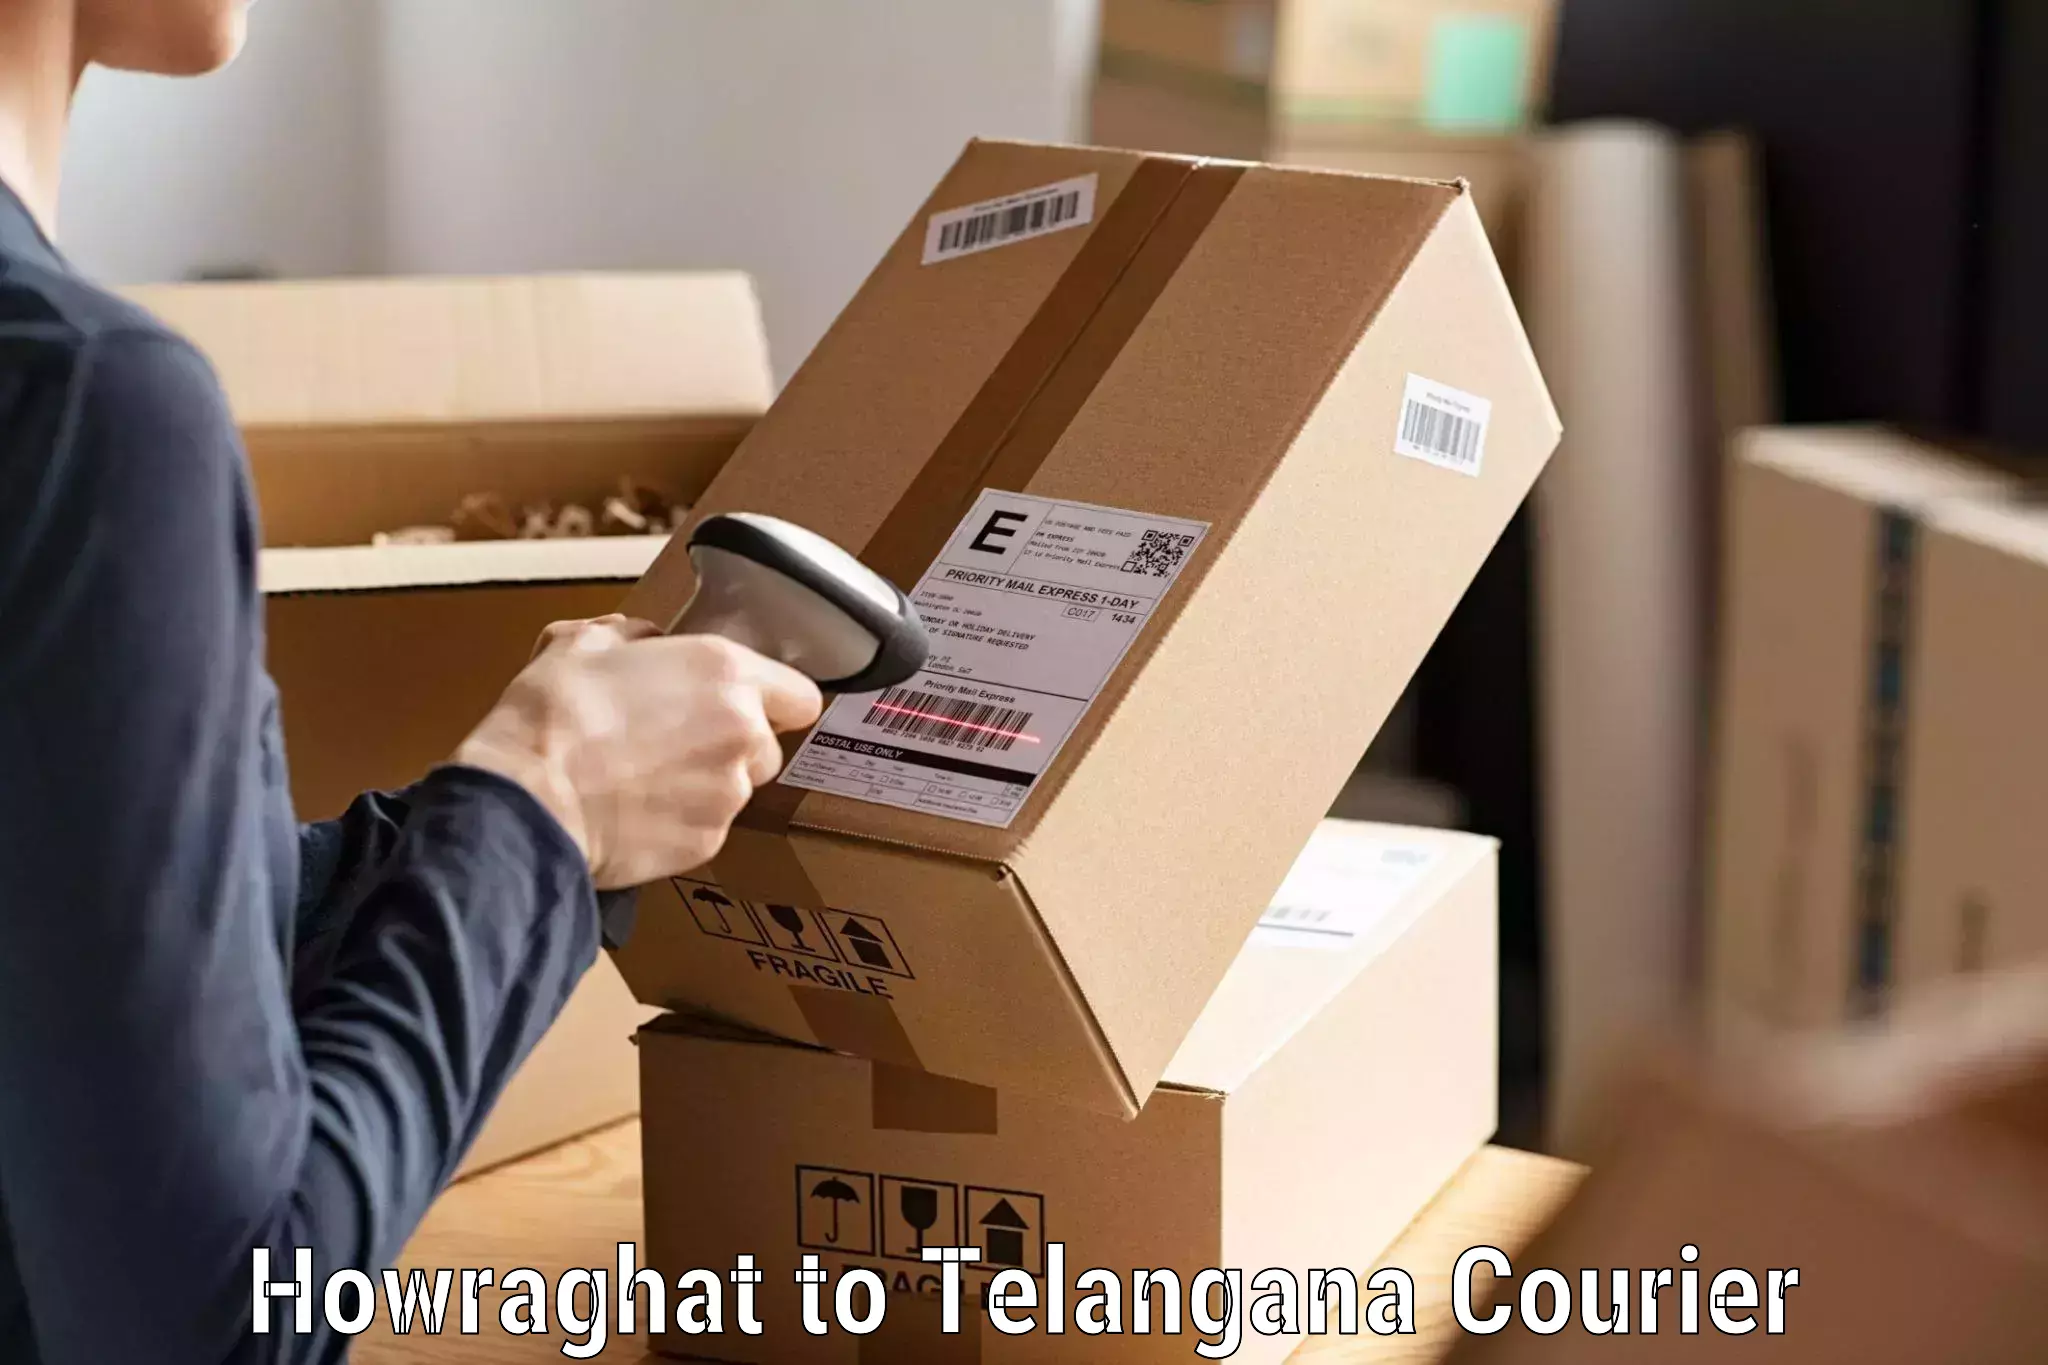 Smart parcel tracking Howraghat to Eligedu